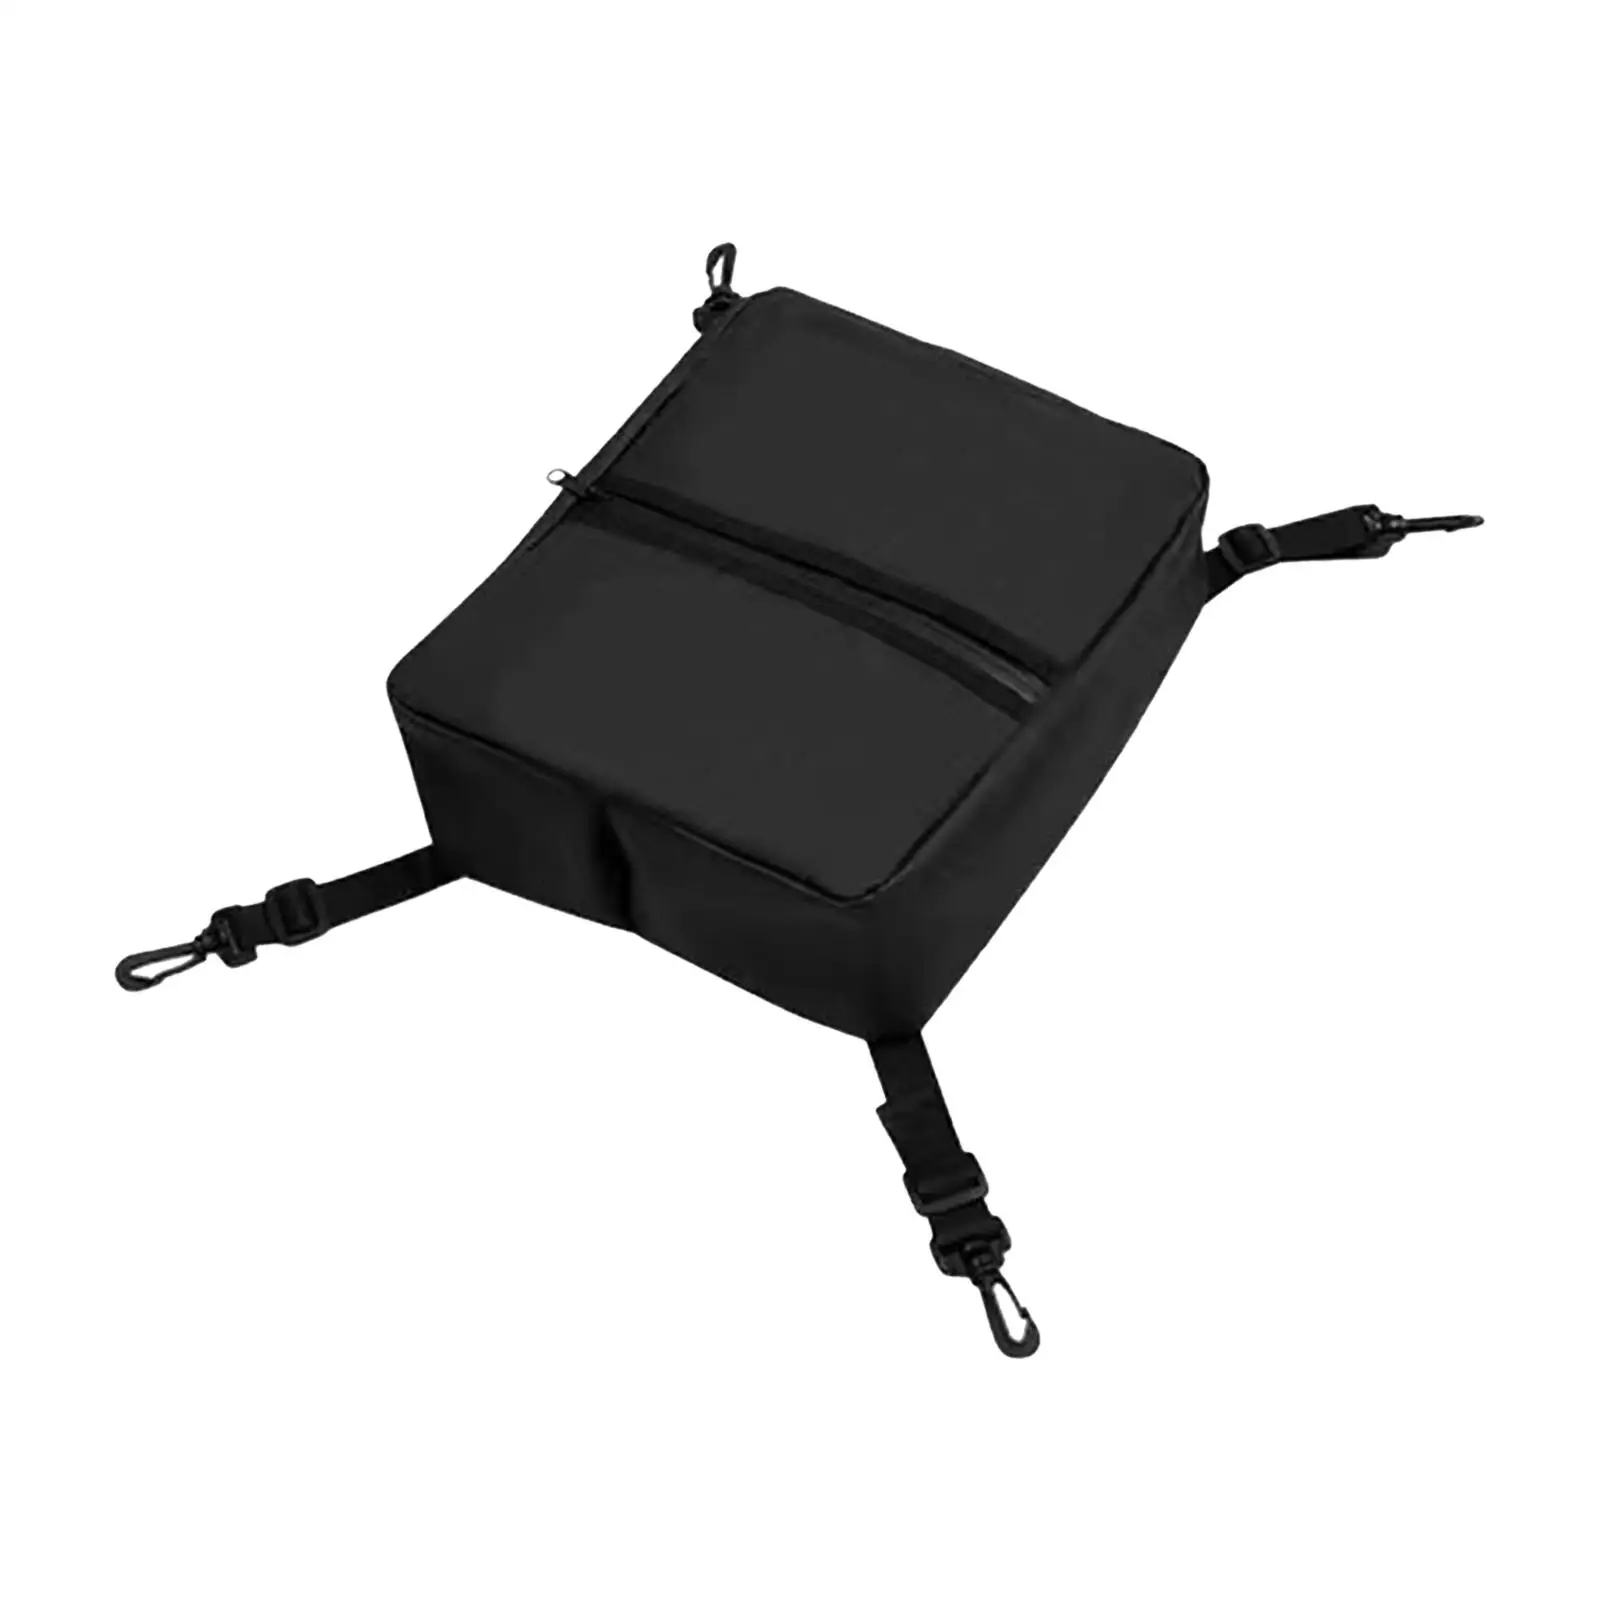 Paddle Board Bag Deck Cooler Bag Food Storage Bag Accessory Durable